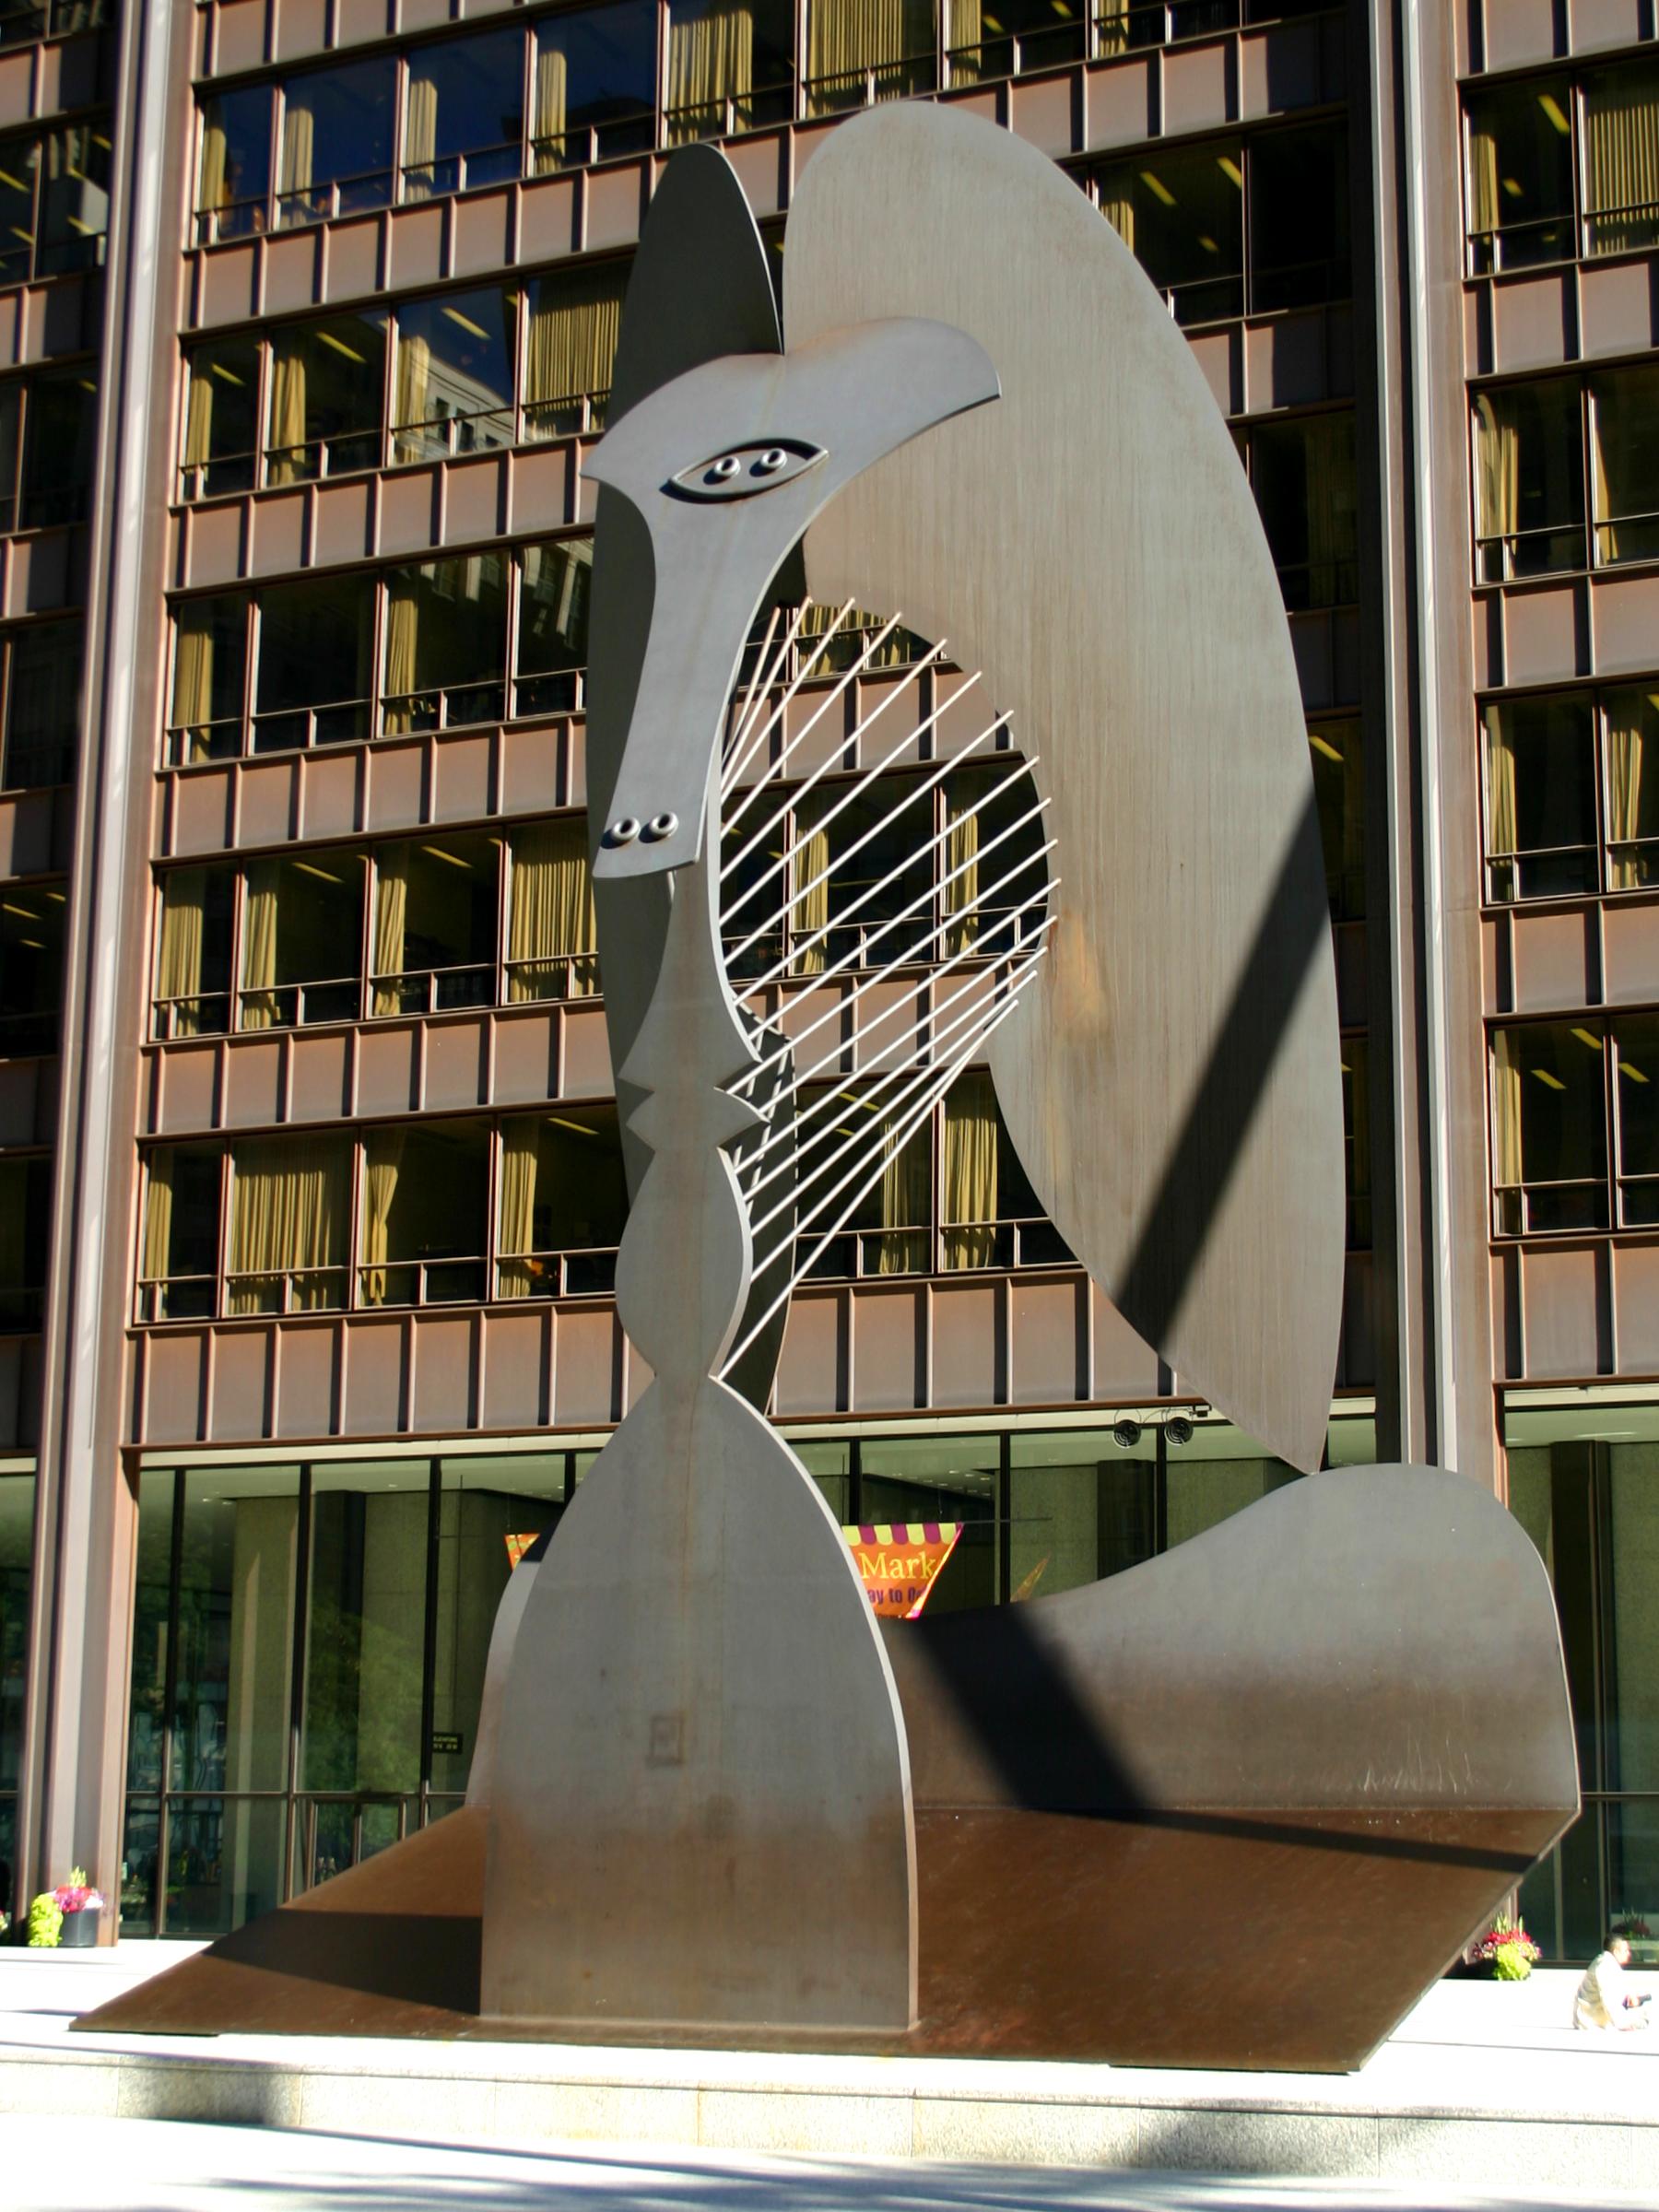 Chicago’s Public Art: The Picasso